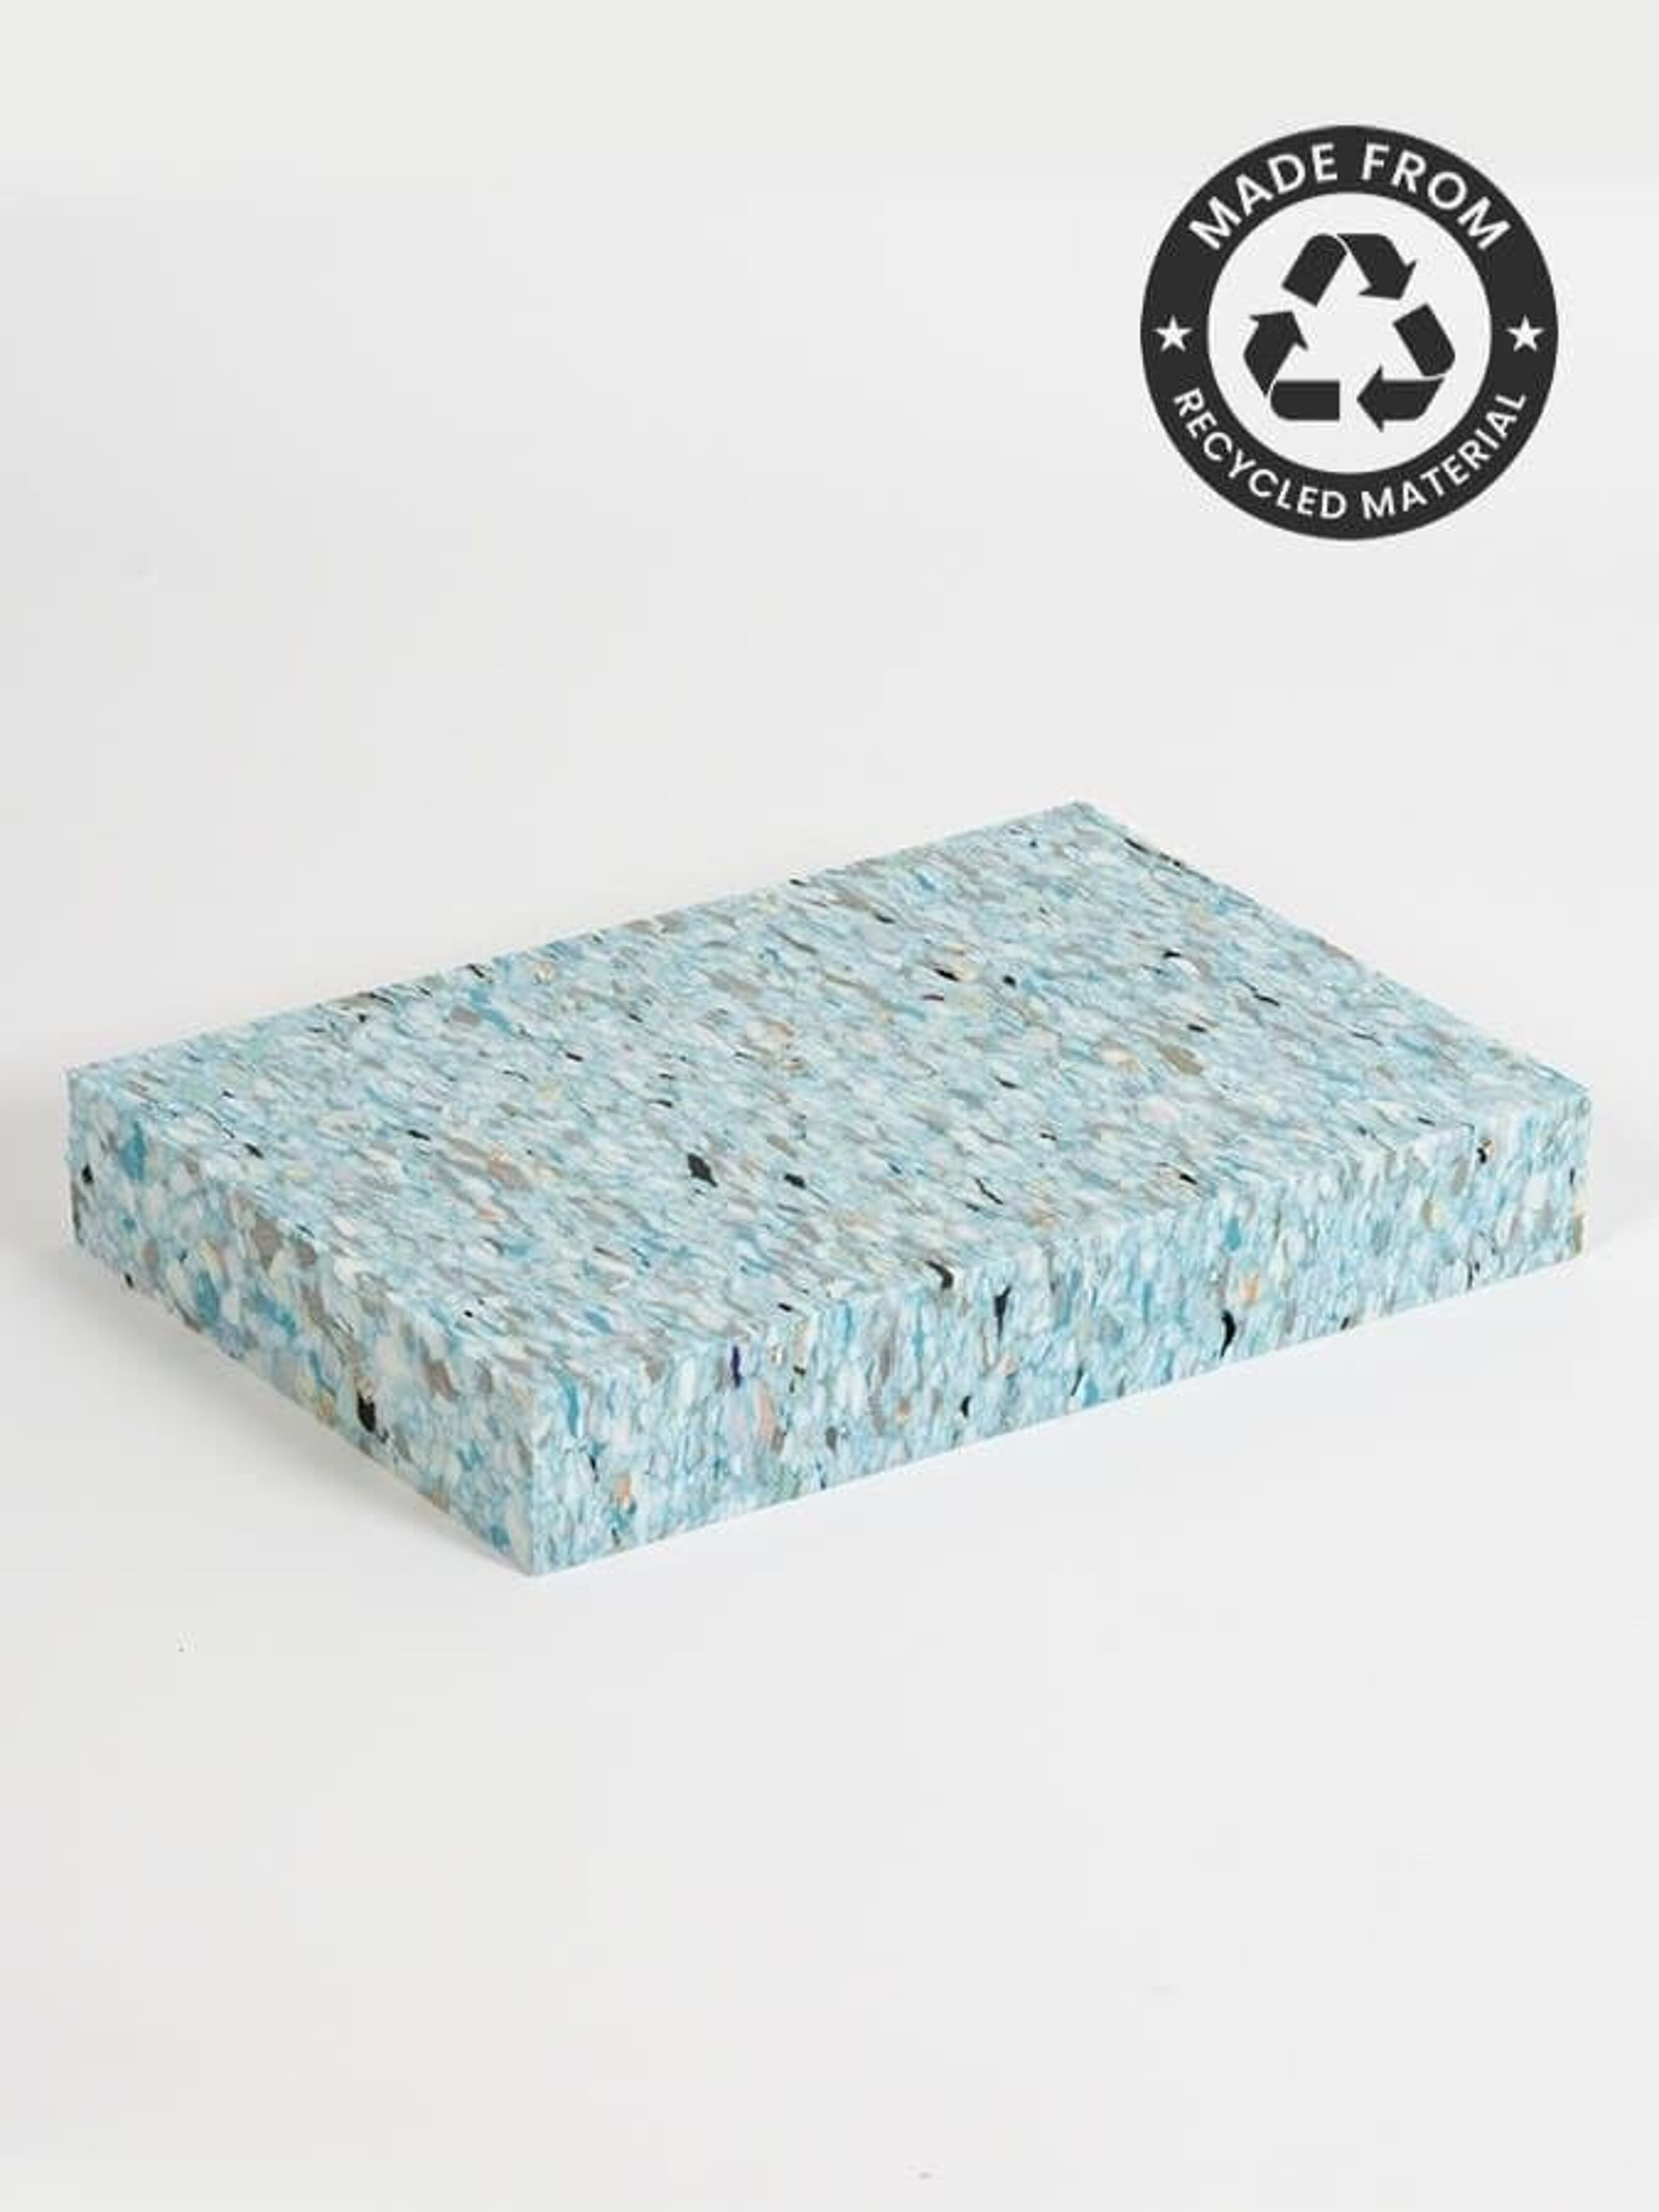 2 x Recycled FULL Chip Foam Yoga Blocks - 5cm / 2 inch FULL HEIGHT Yoga  Chip Blocks : : Sports & Outdoors